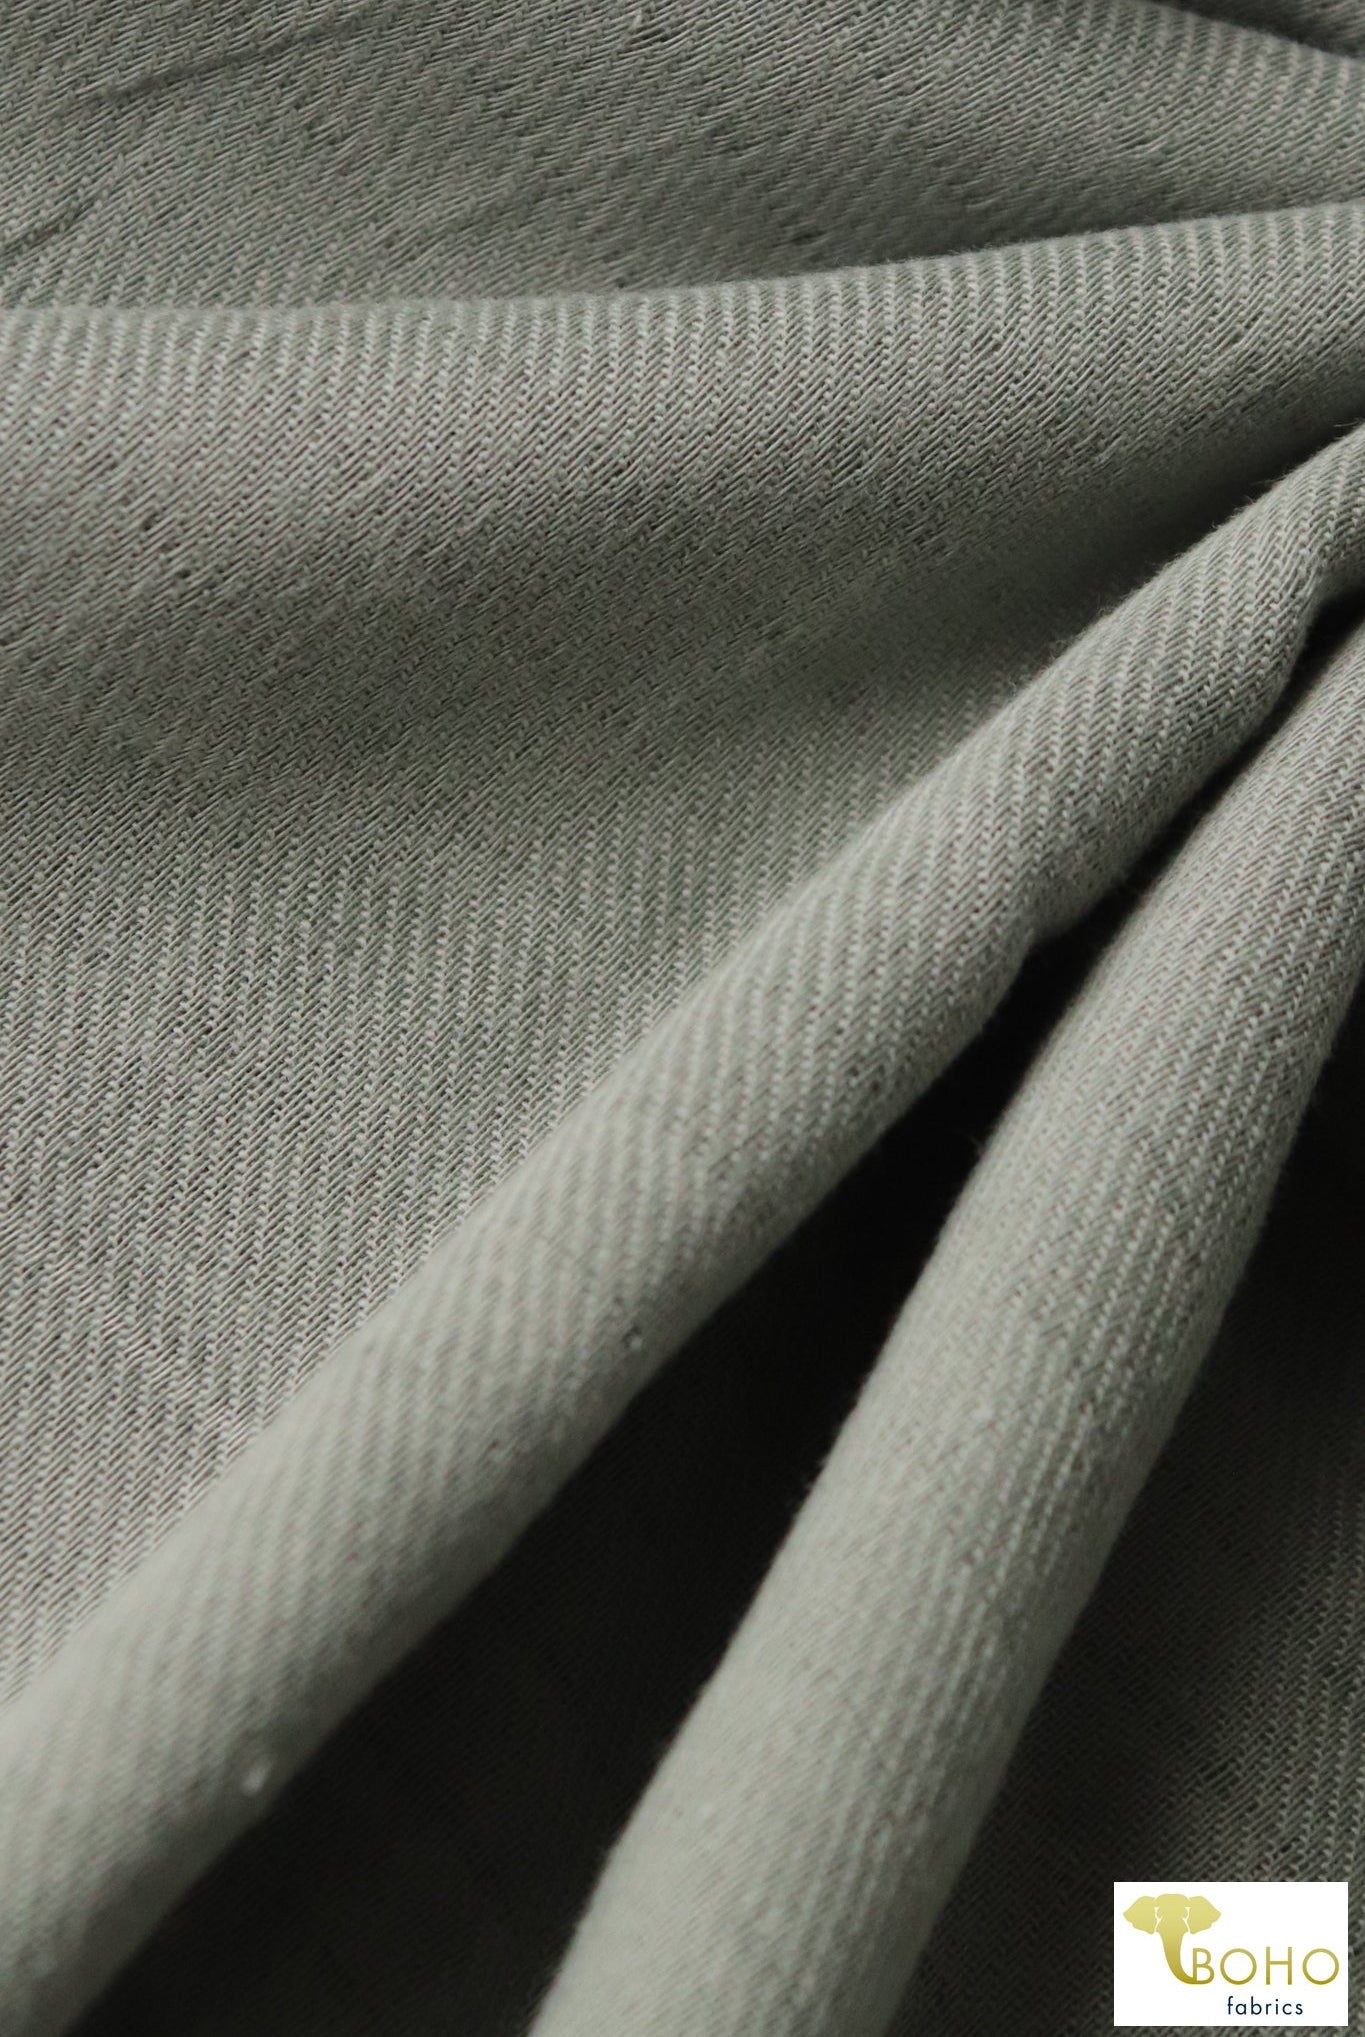 Trellis Green, Twill/Gauze Woven. Double Layer - Boho Fabrics